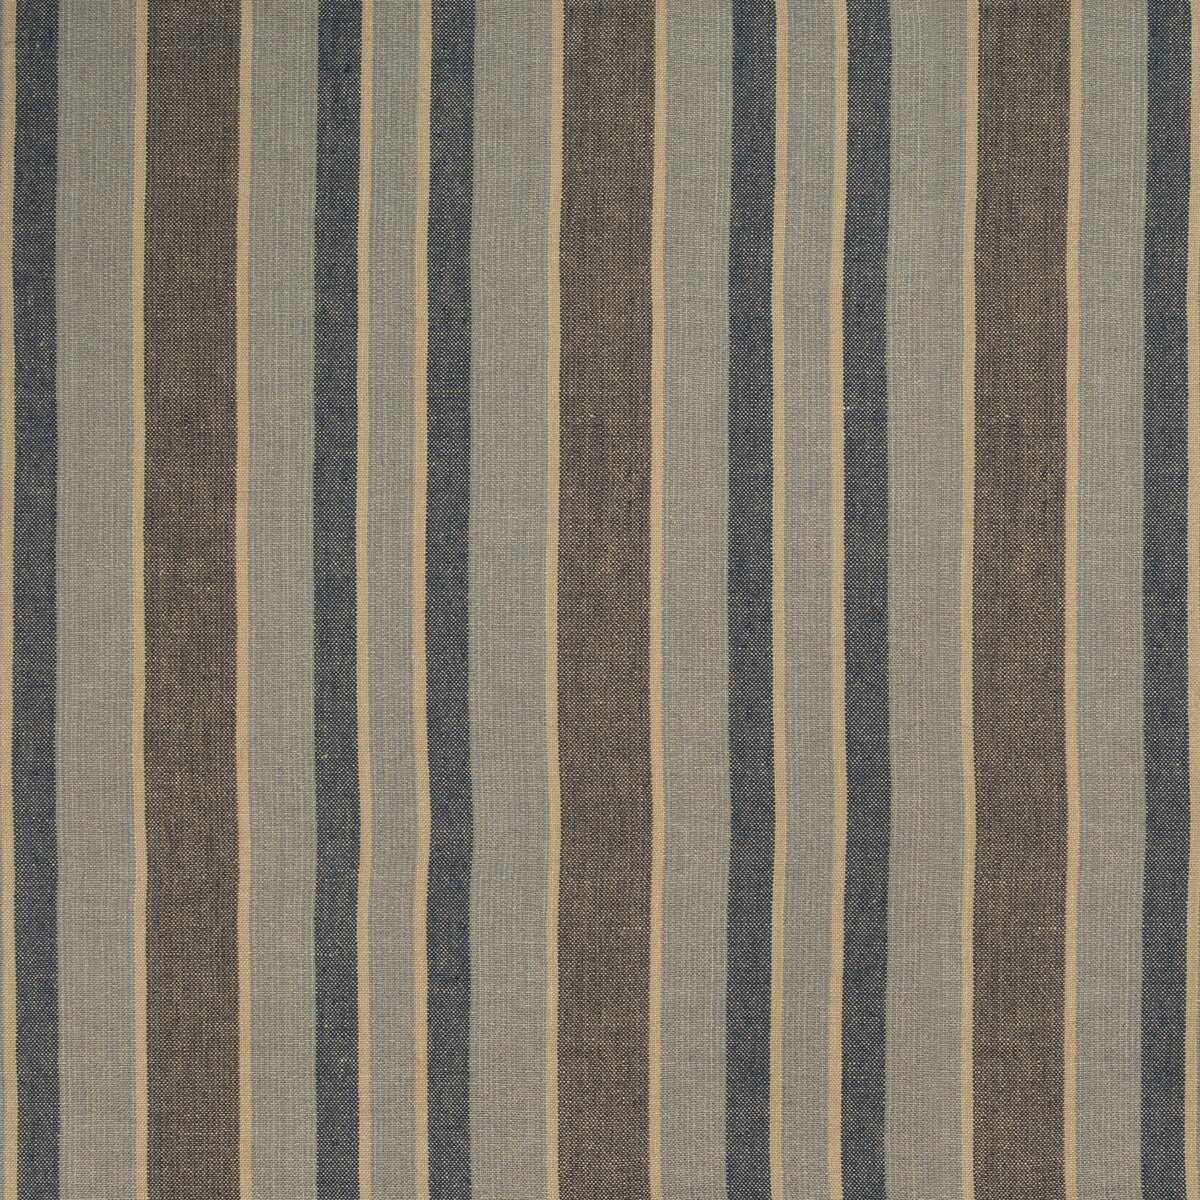 Bondi Stripe fabric in denim color - pattern 35399.516.0 - by Kravet Design in the Nate Berkus Well-Traveled collection